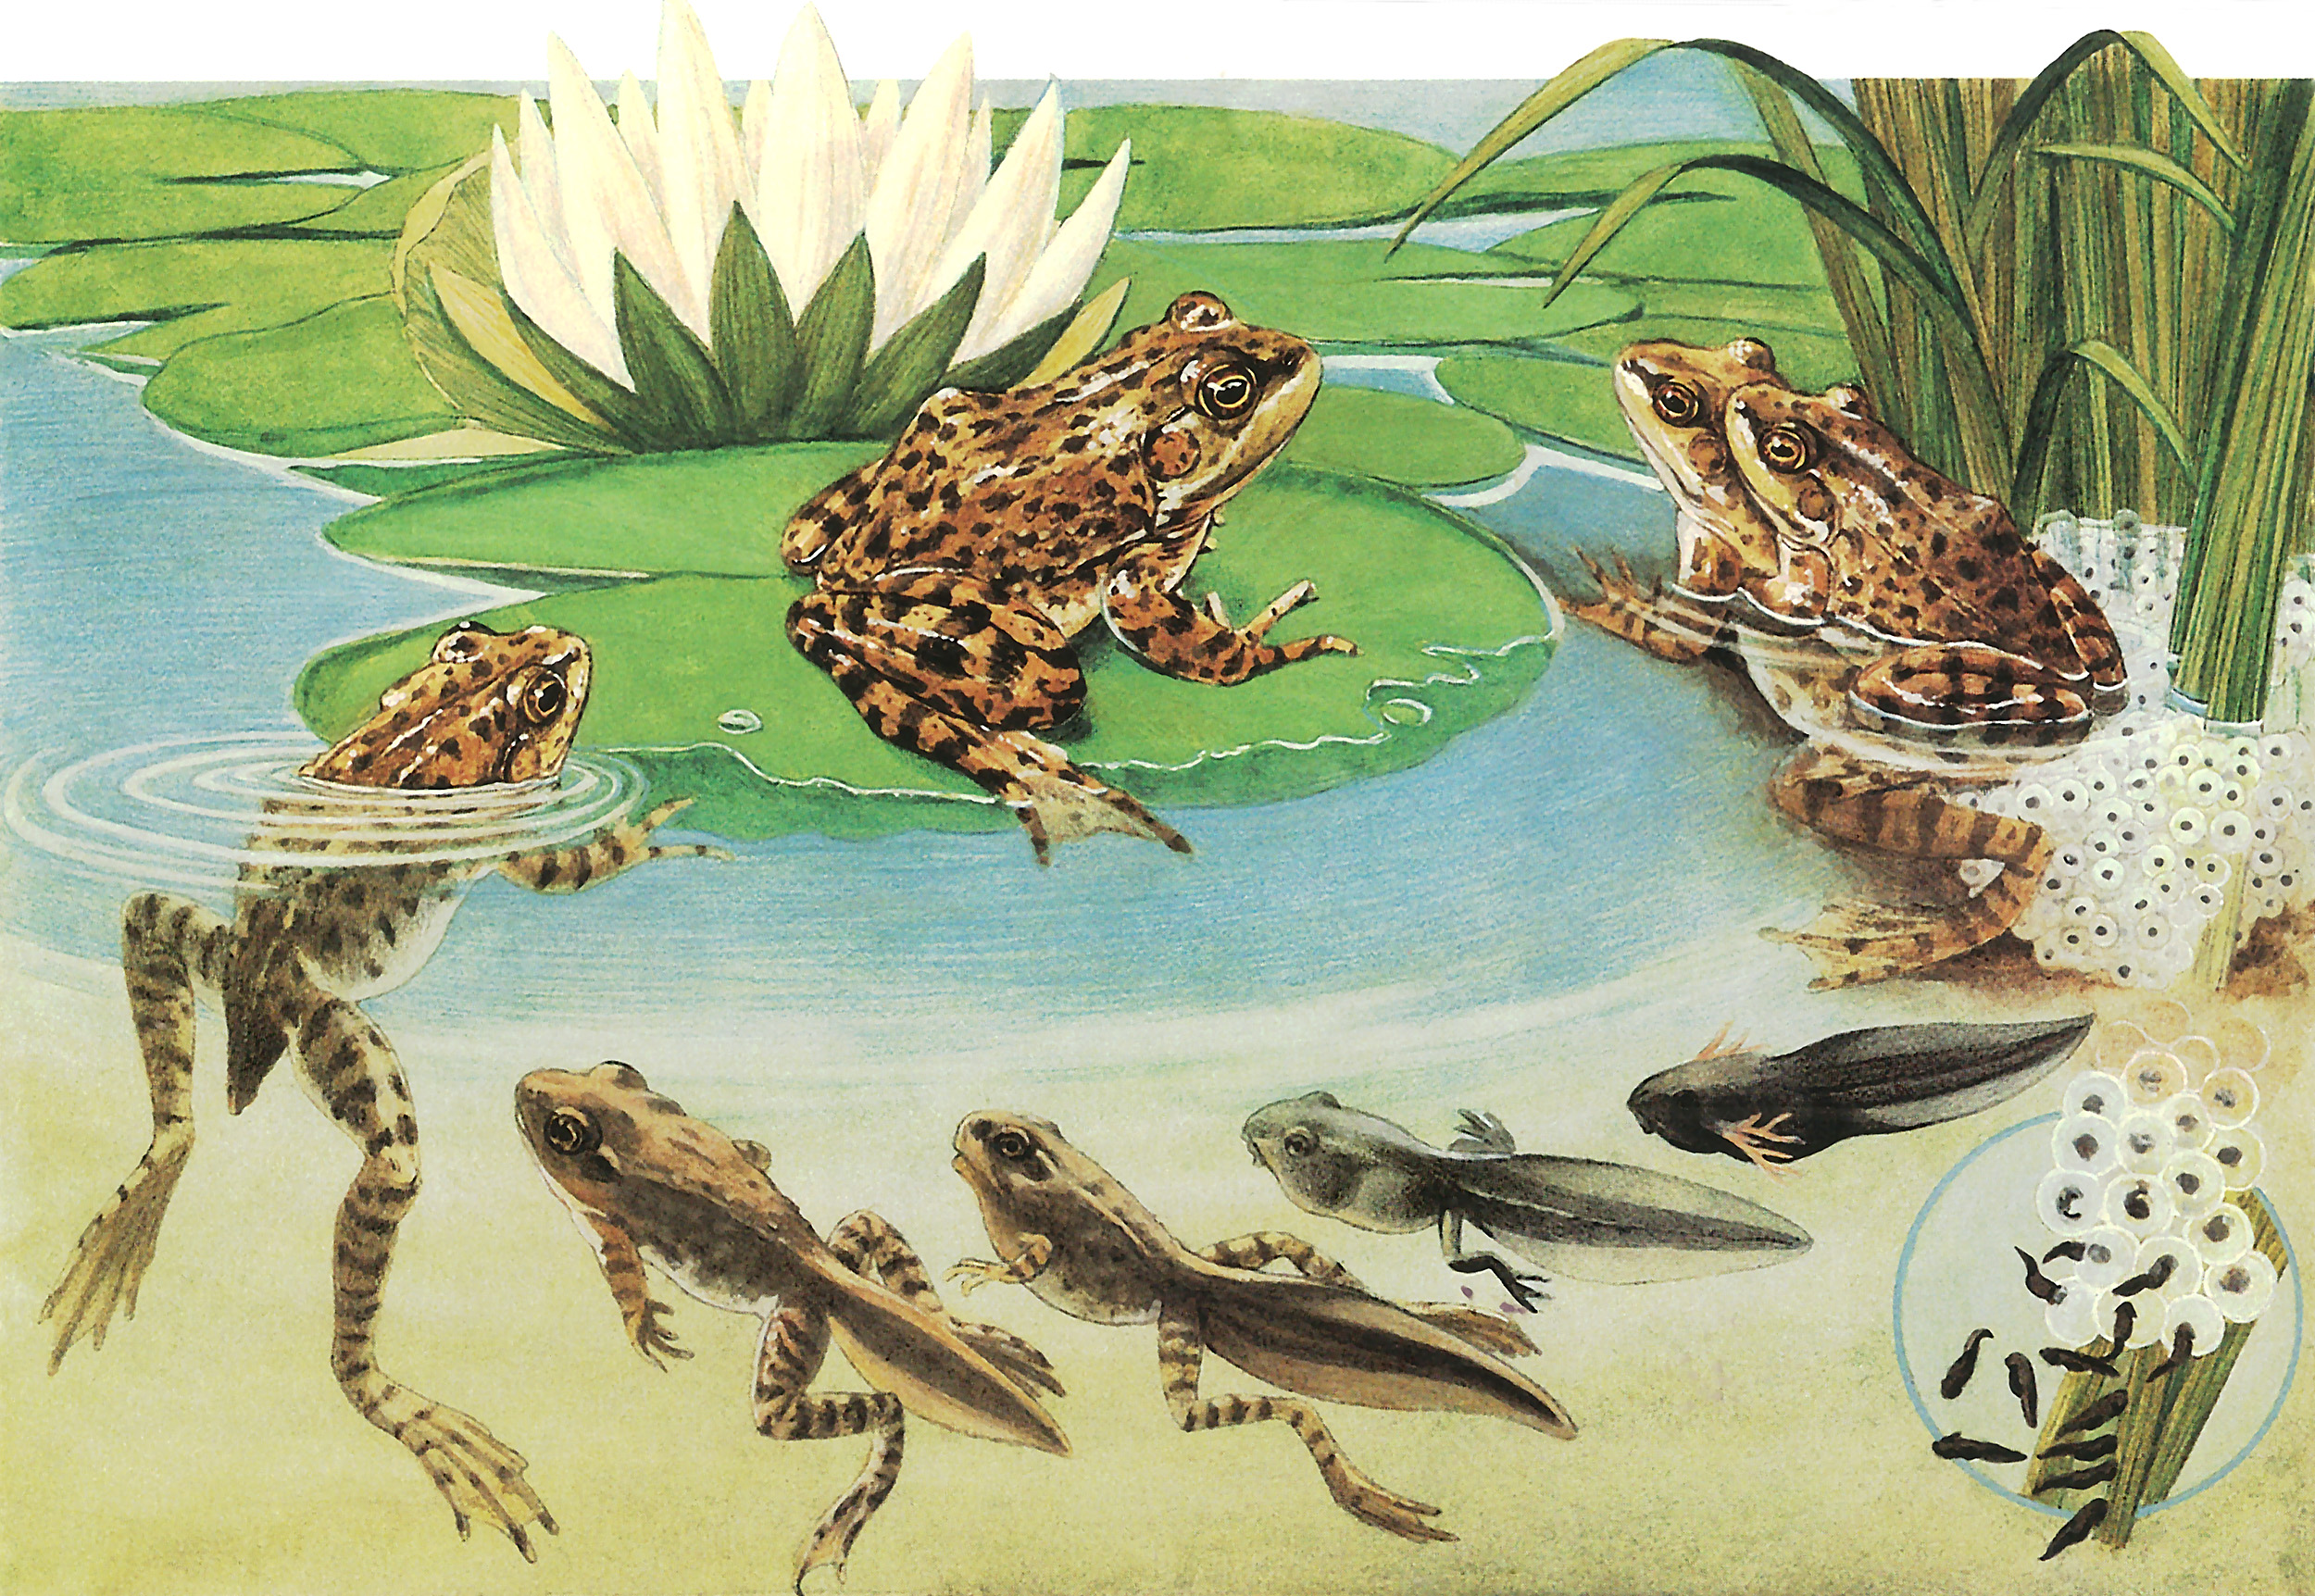 Frog-life-cycle-2.jpg